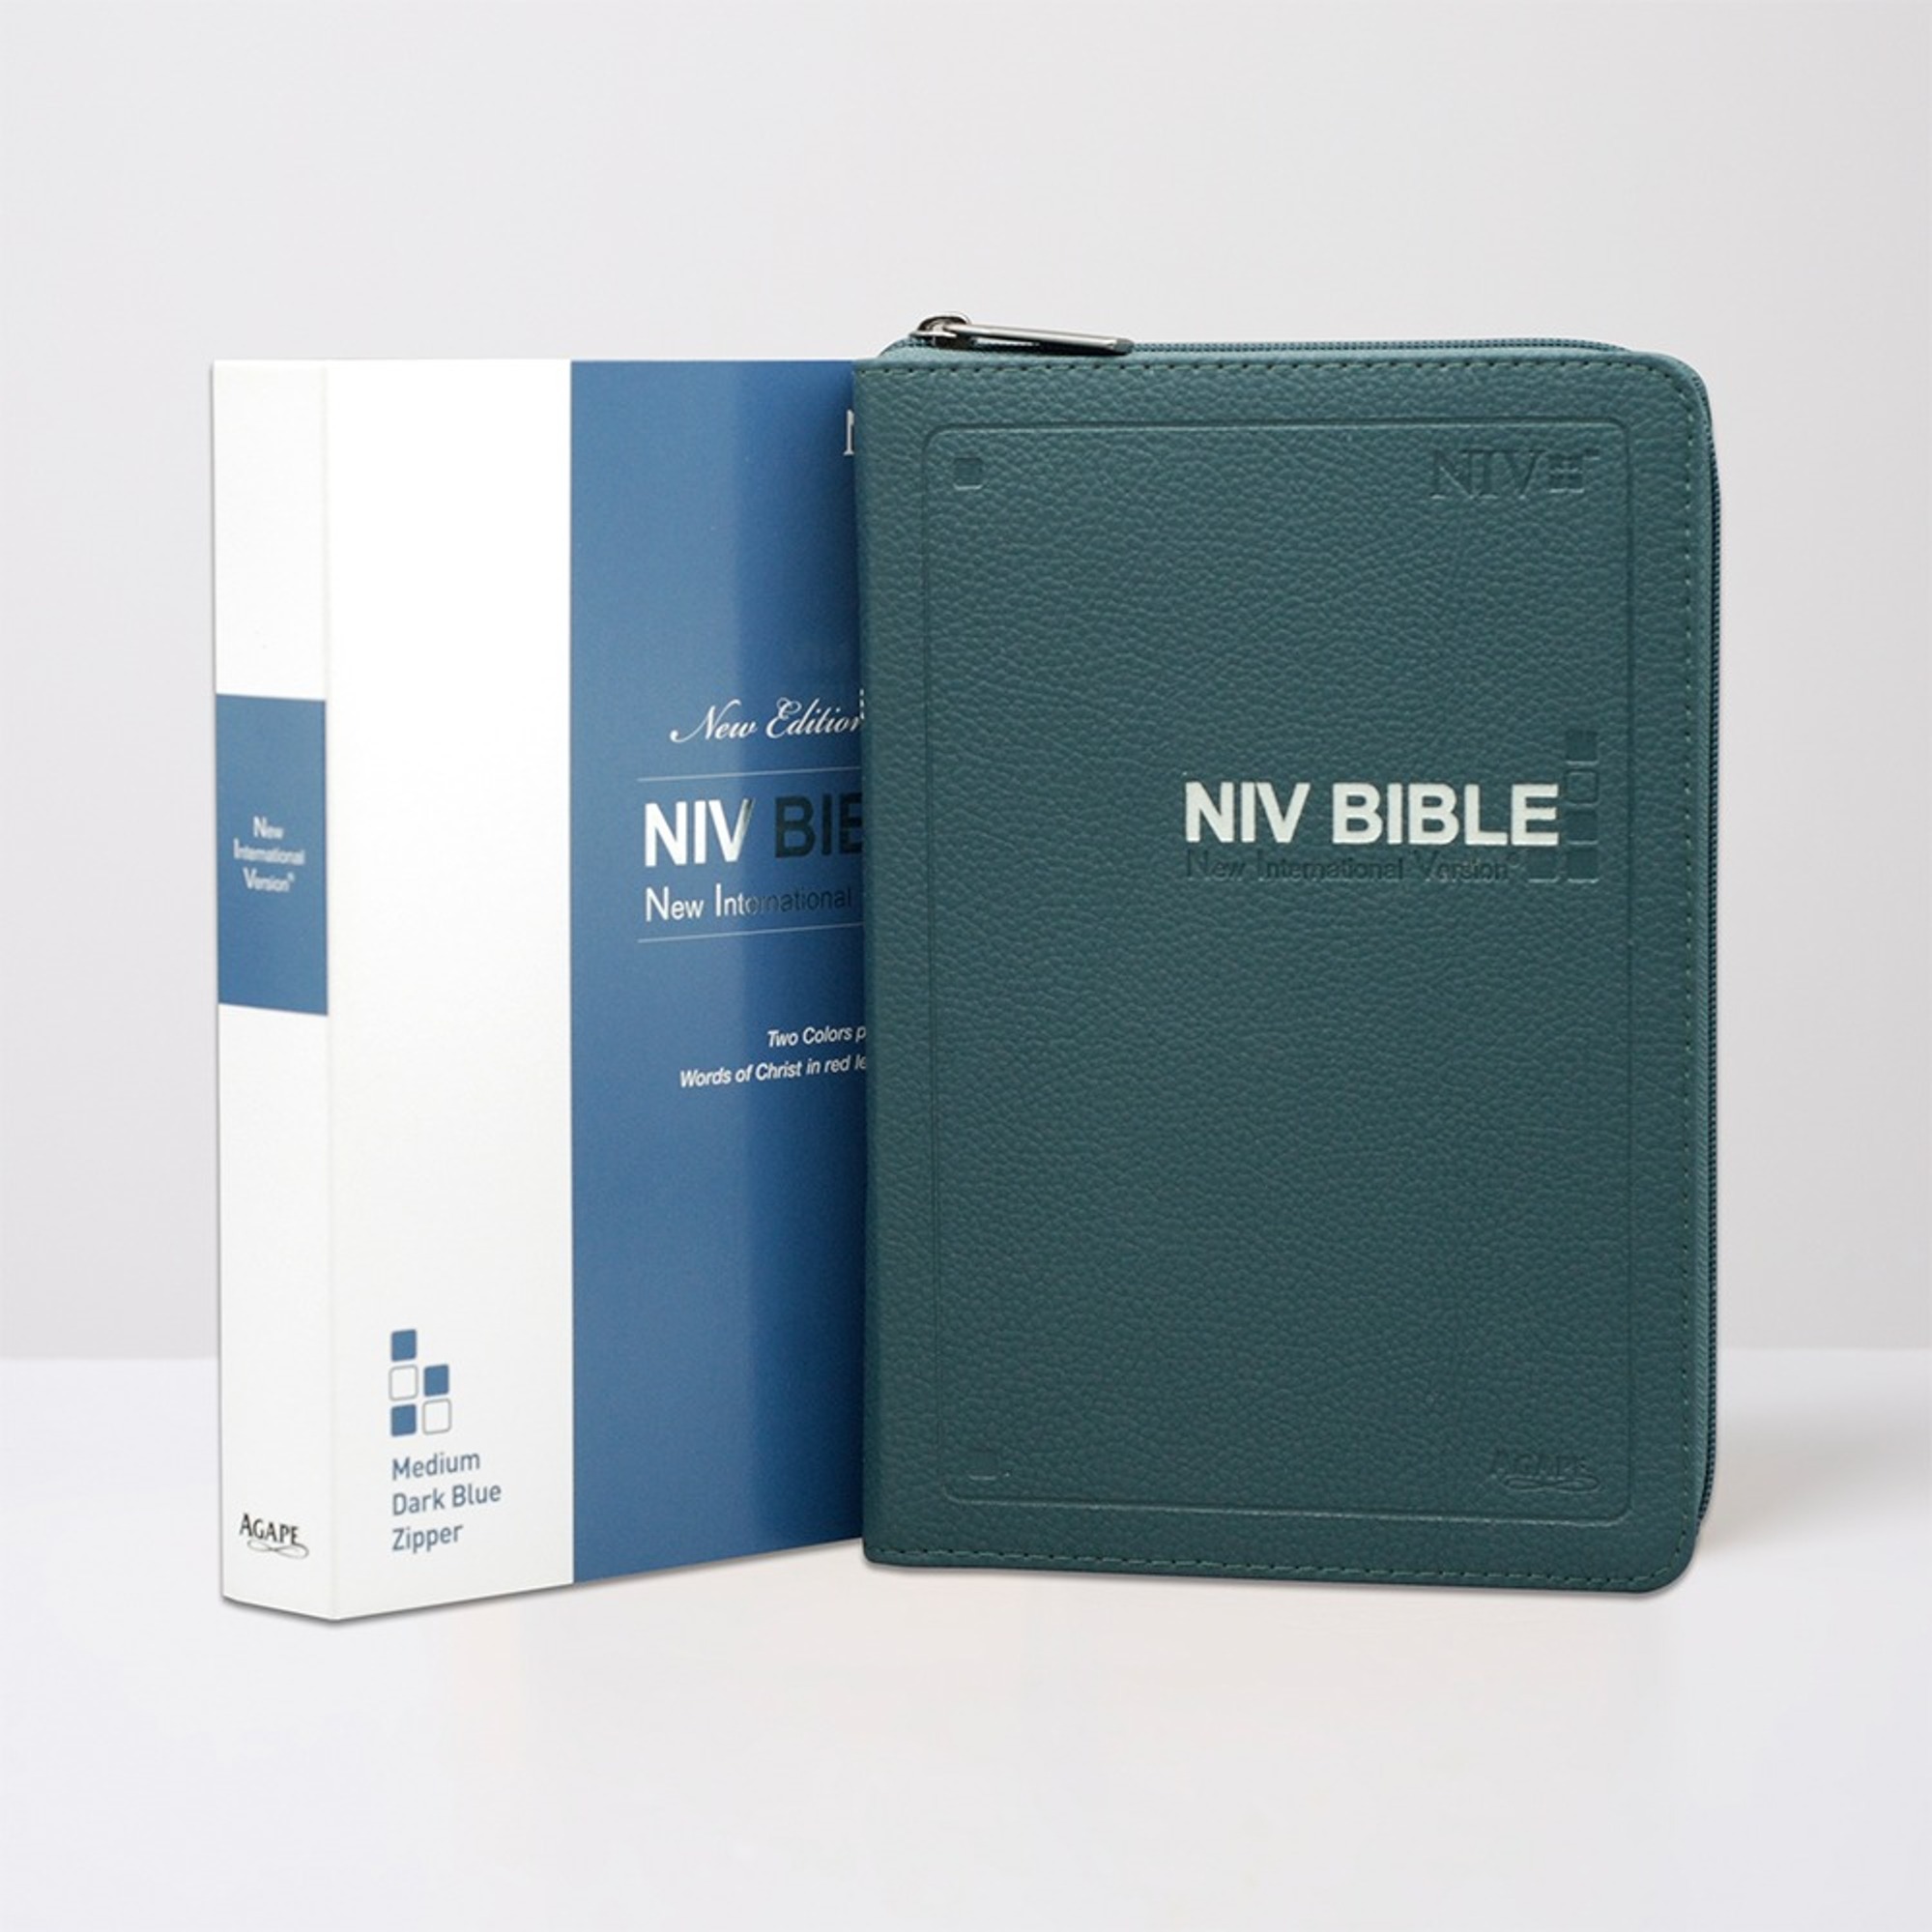 NIVBIBLE 영문성경/중단본/지퍼/브라운